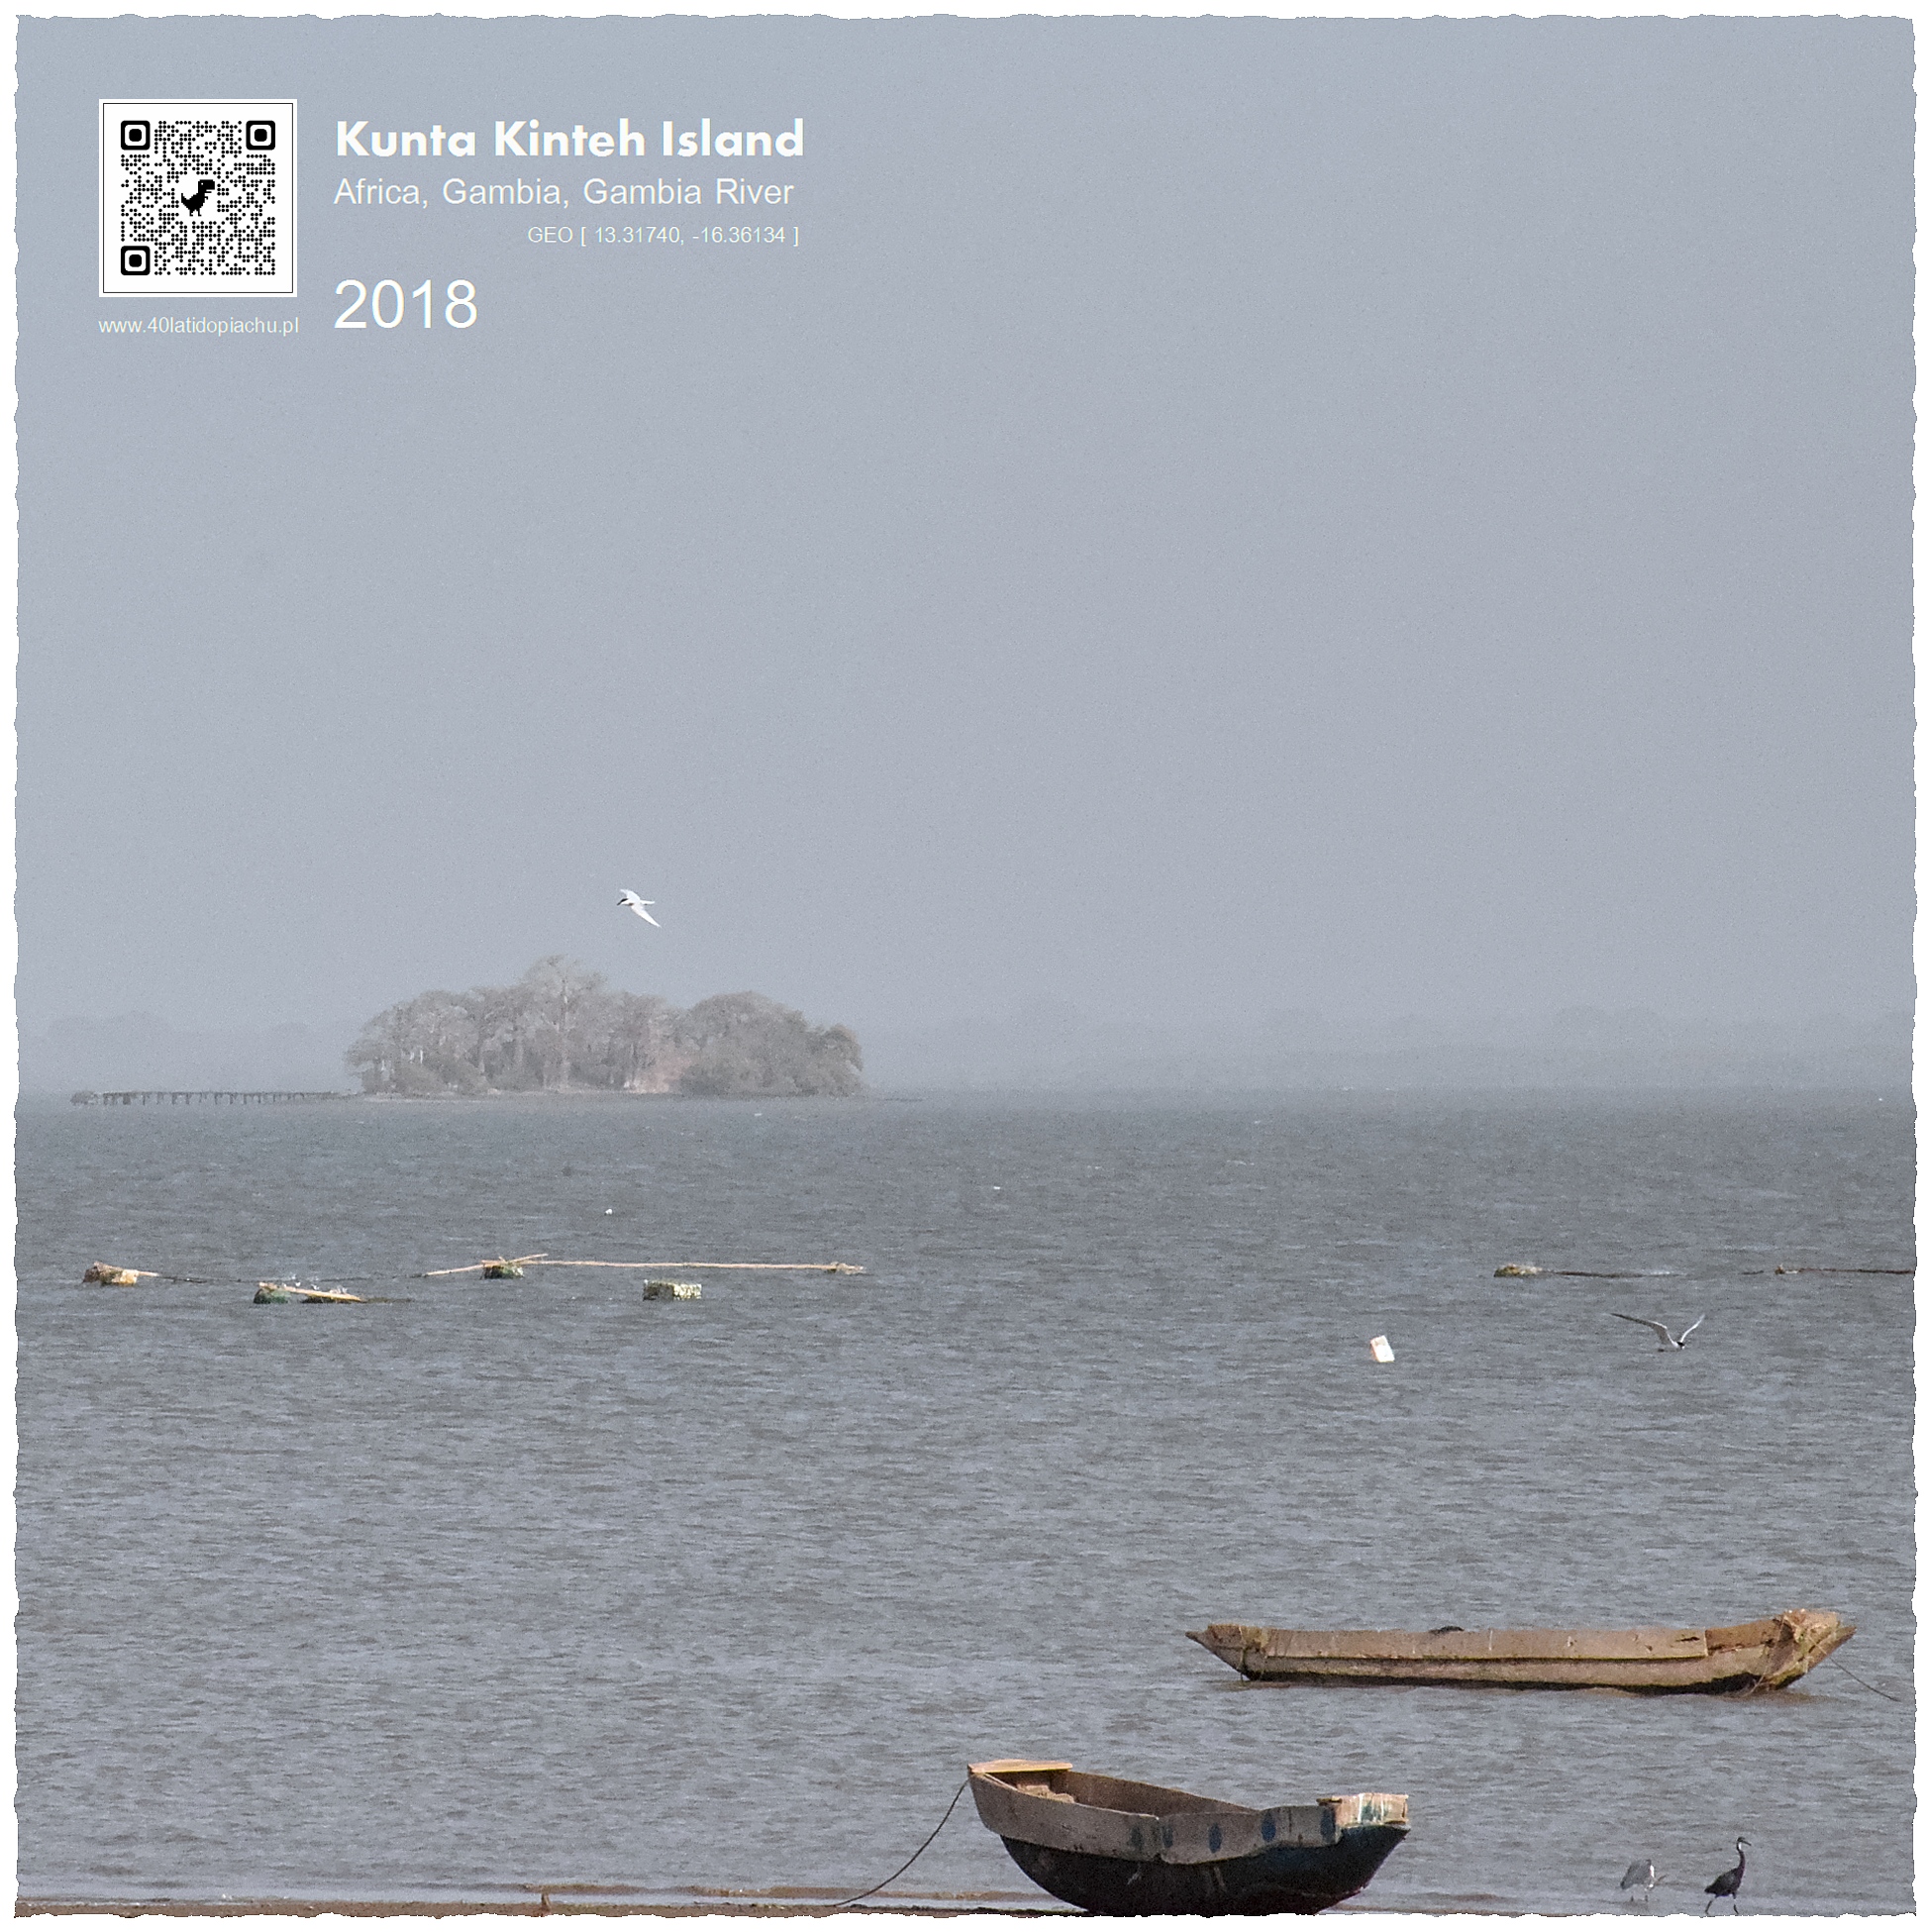 Gambia, rzeka Gambia wyspa Kunta Kinteh